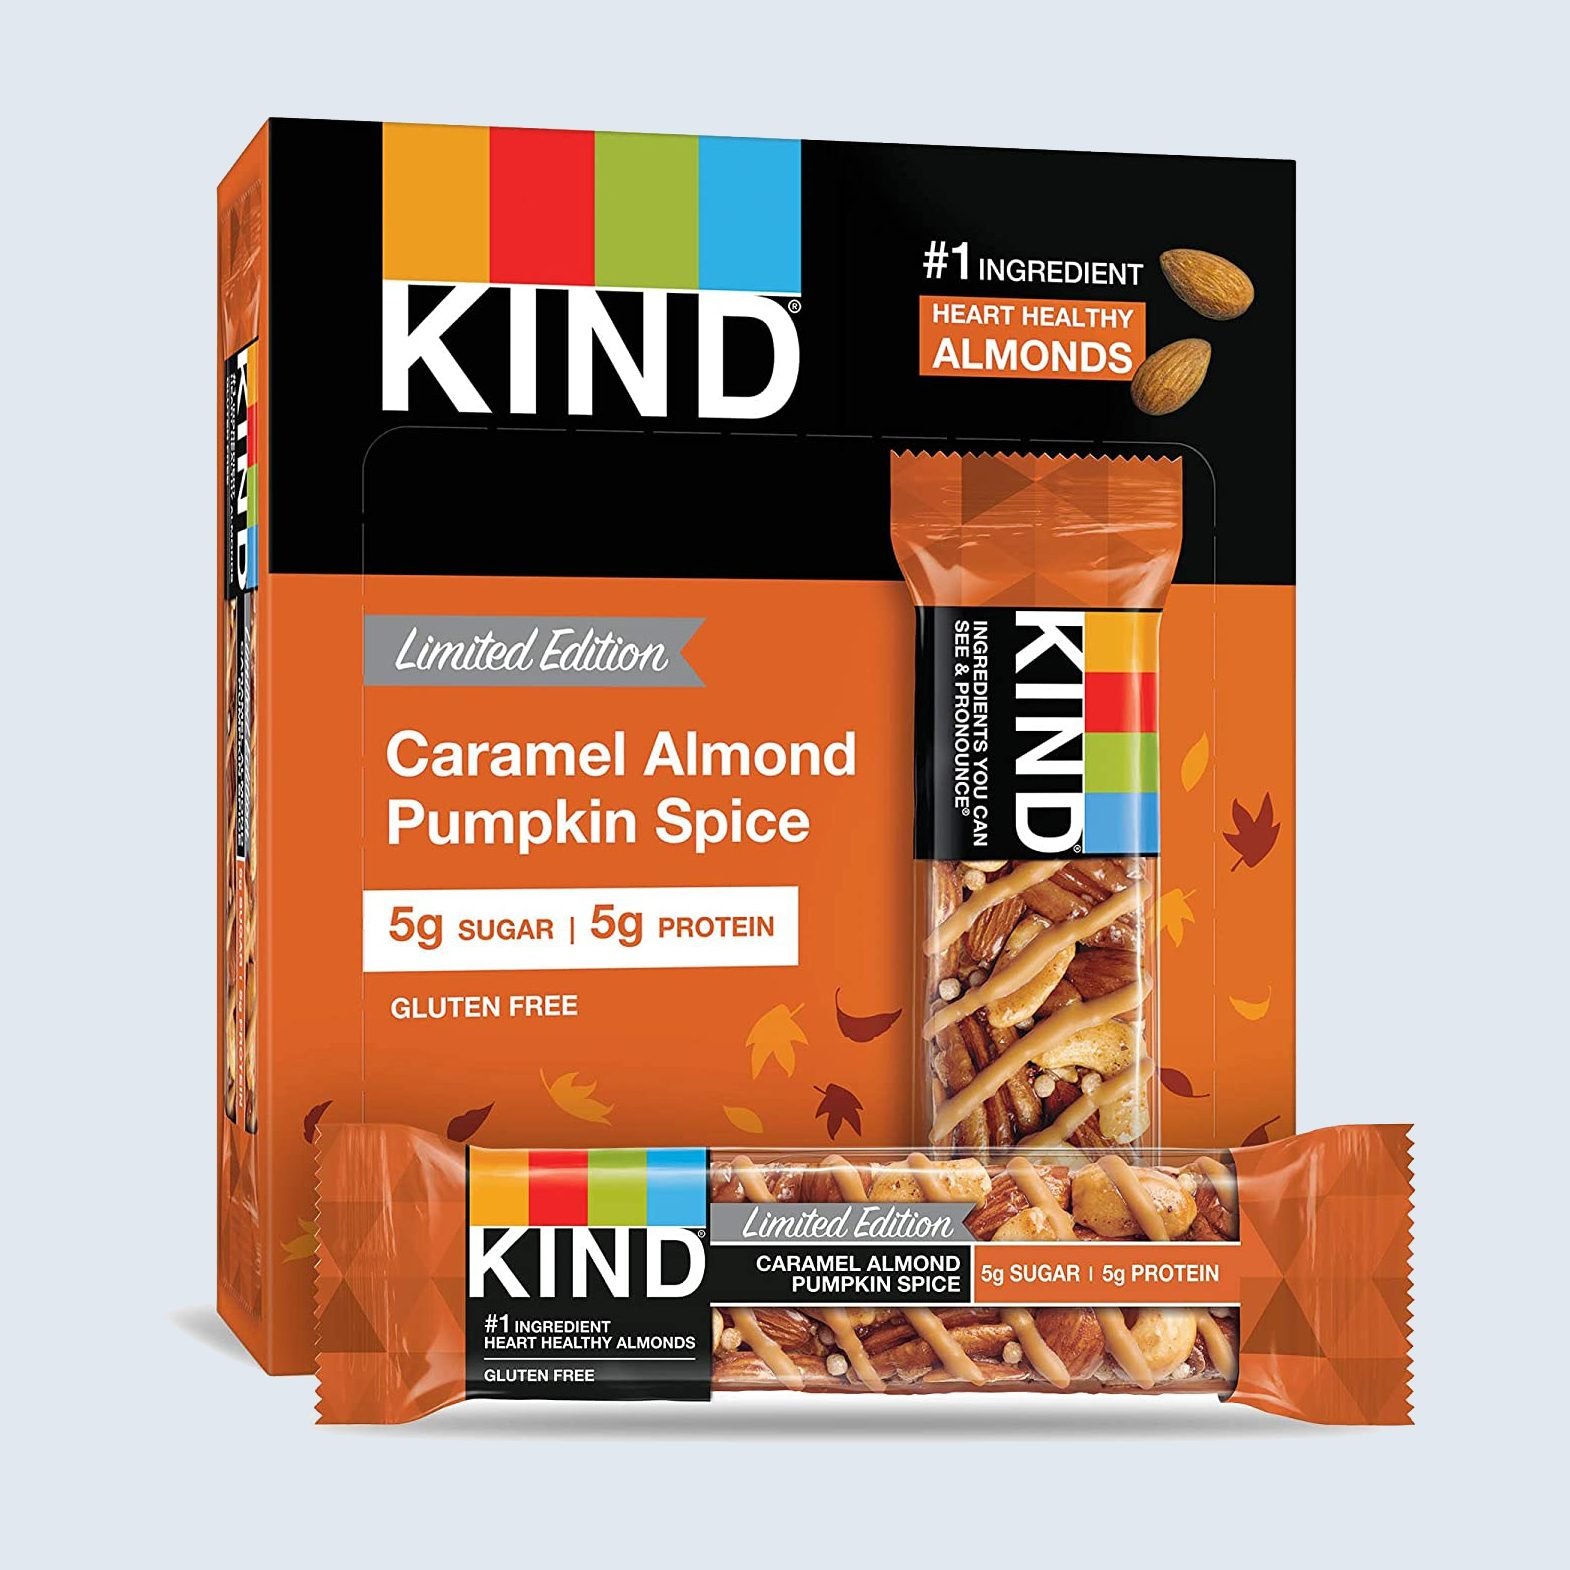 Kind Caramel Almond Pumpkin Spice Bars